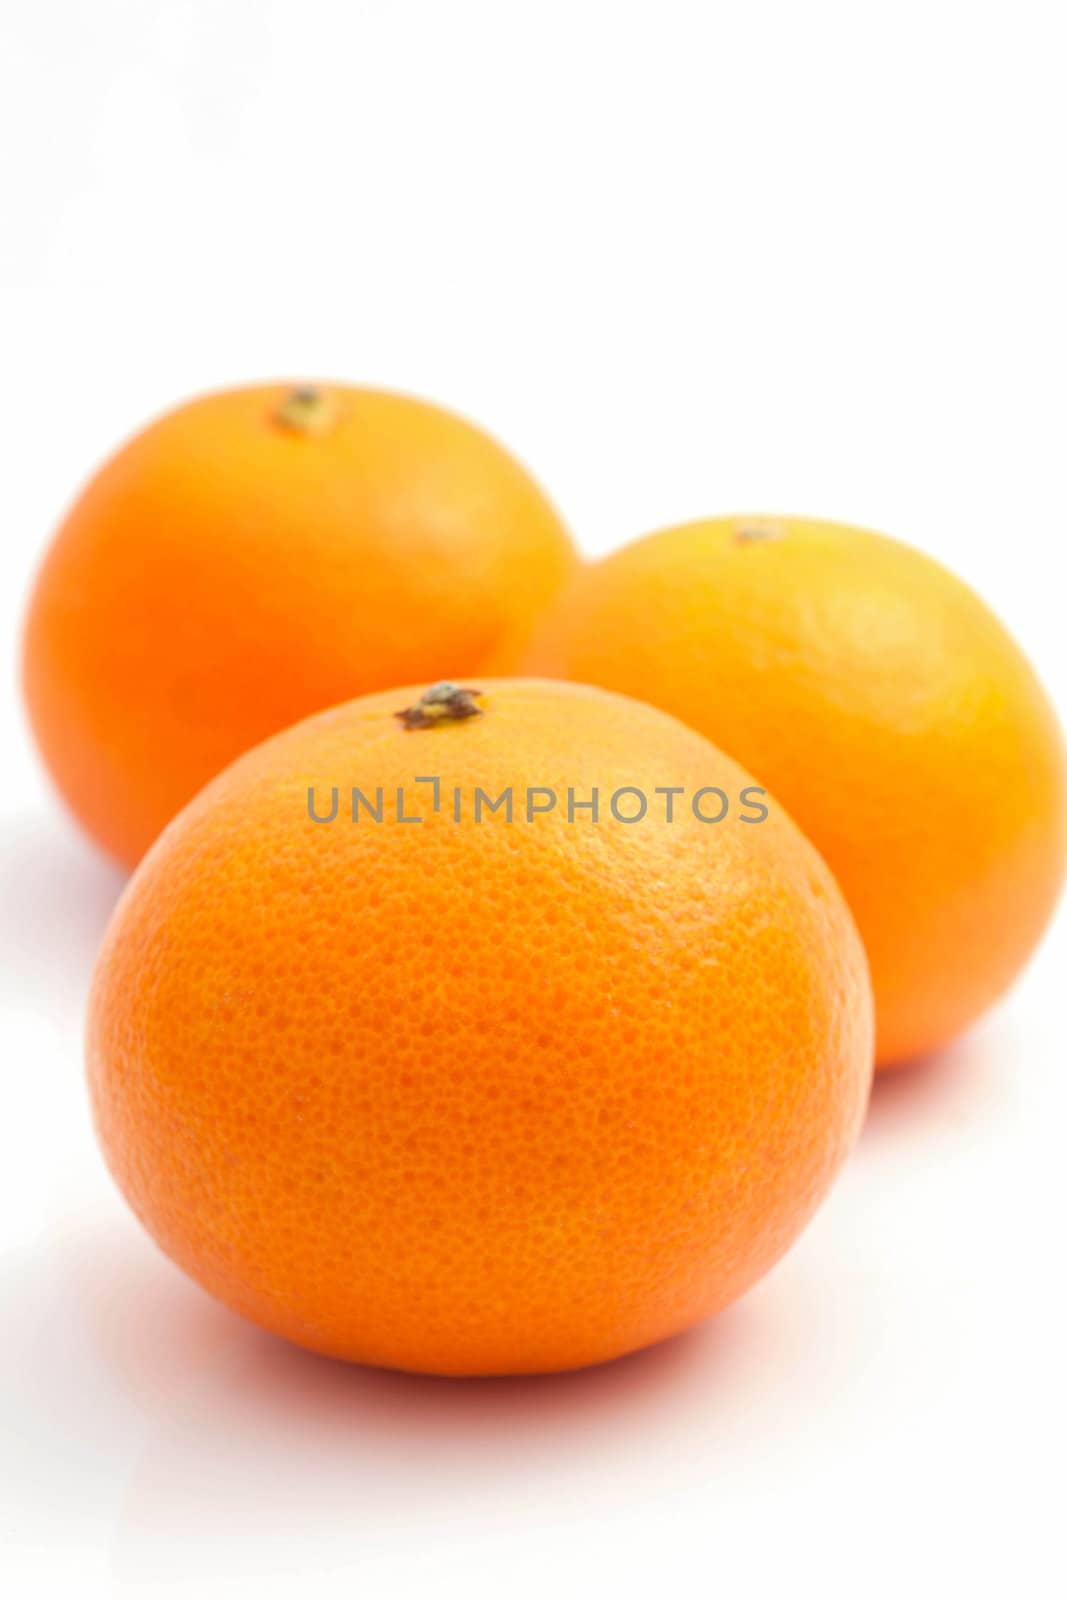 Bright orange color on a white background.